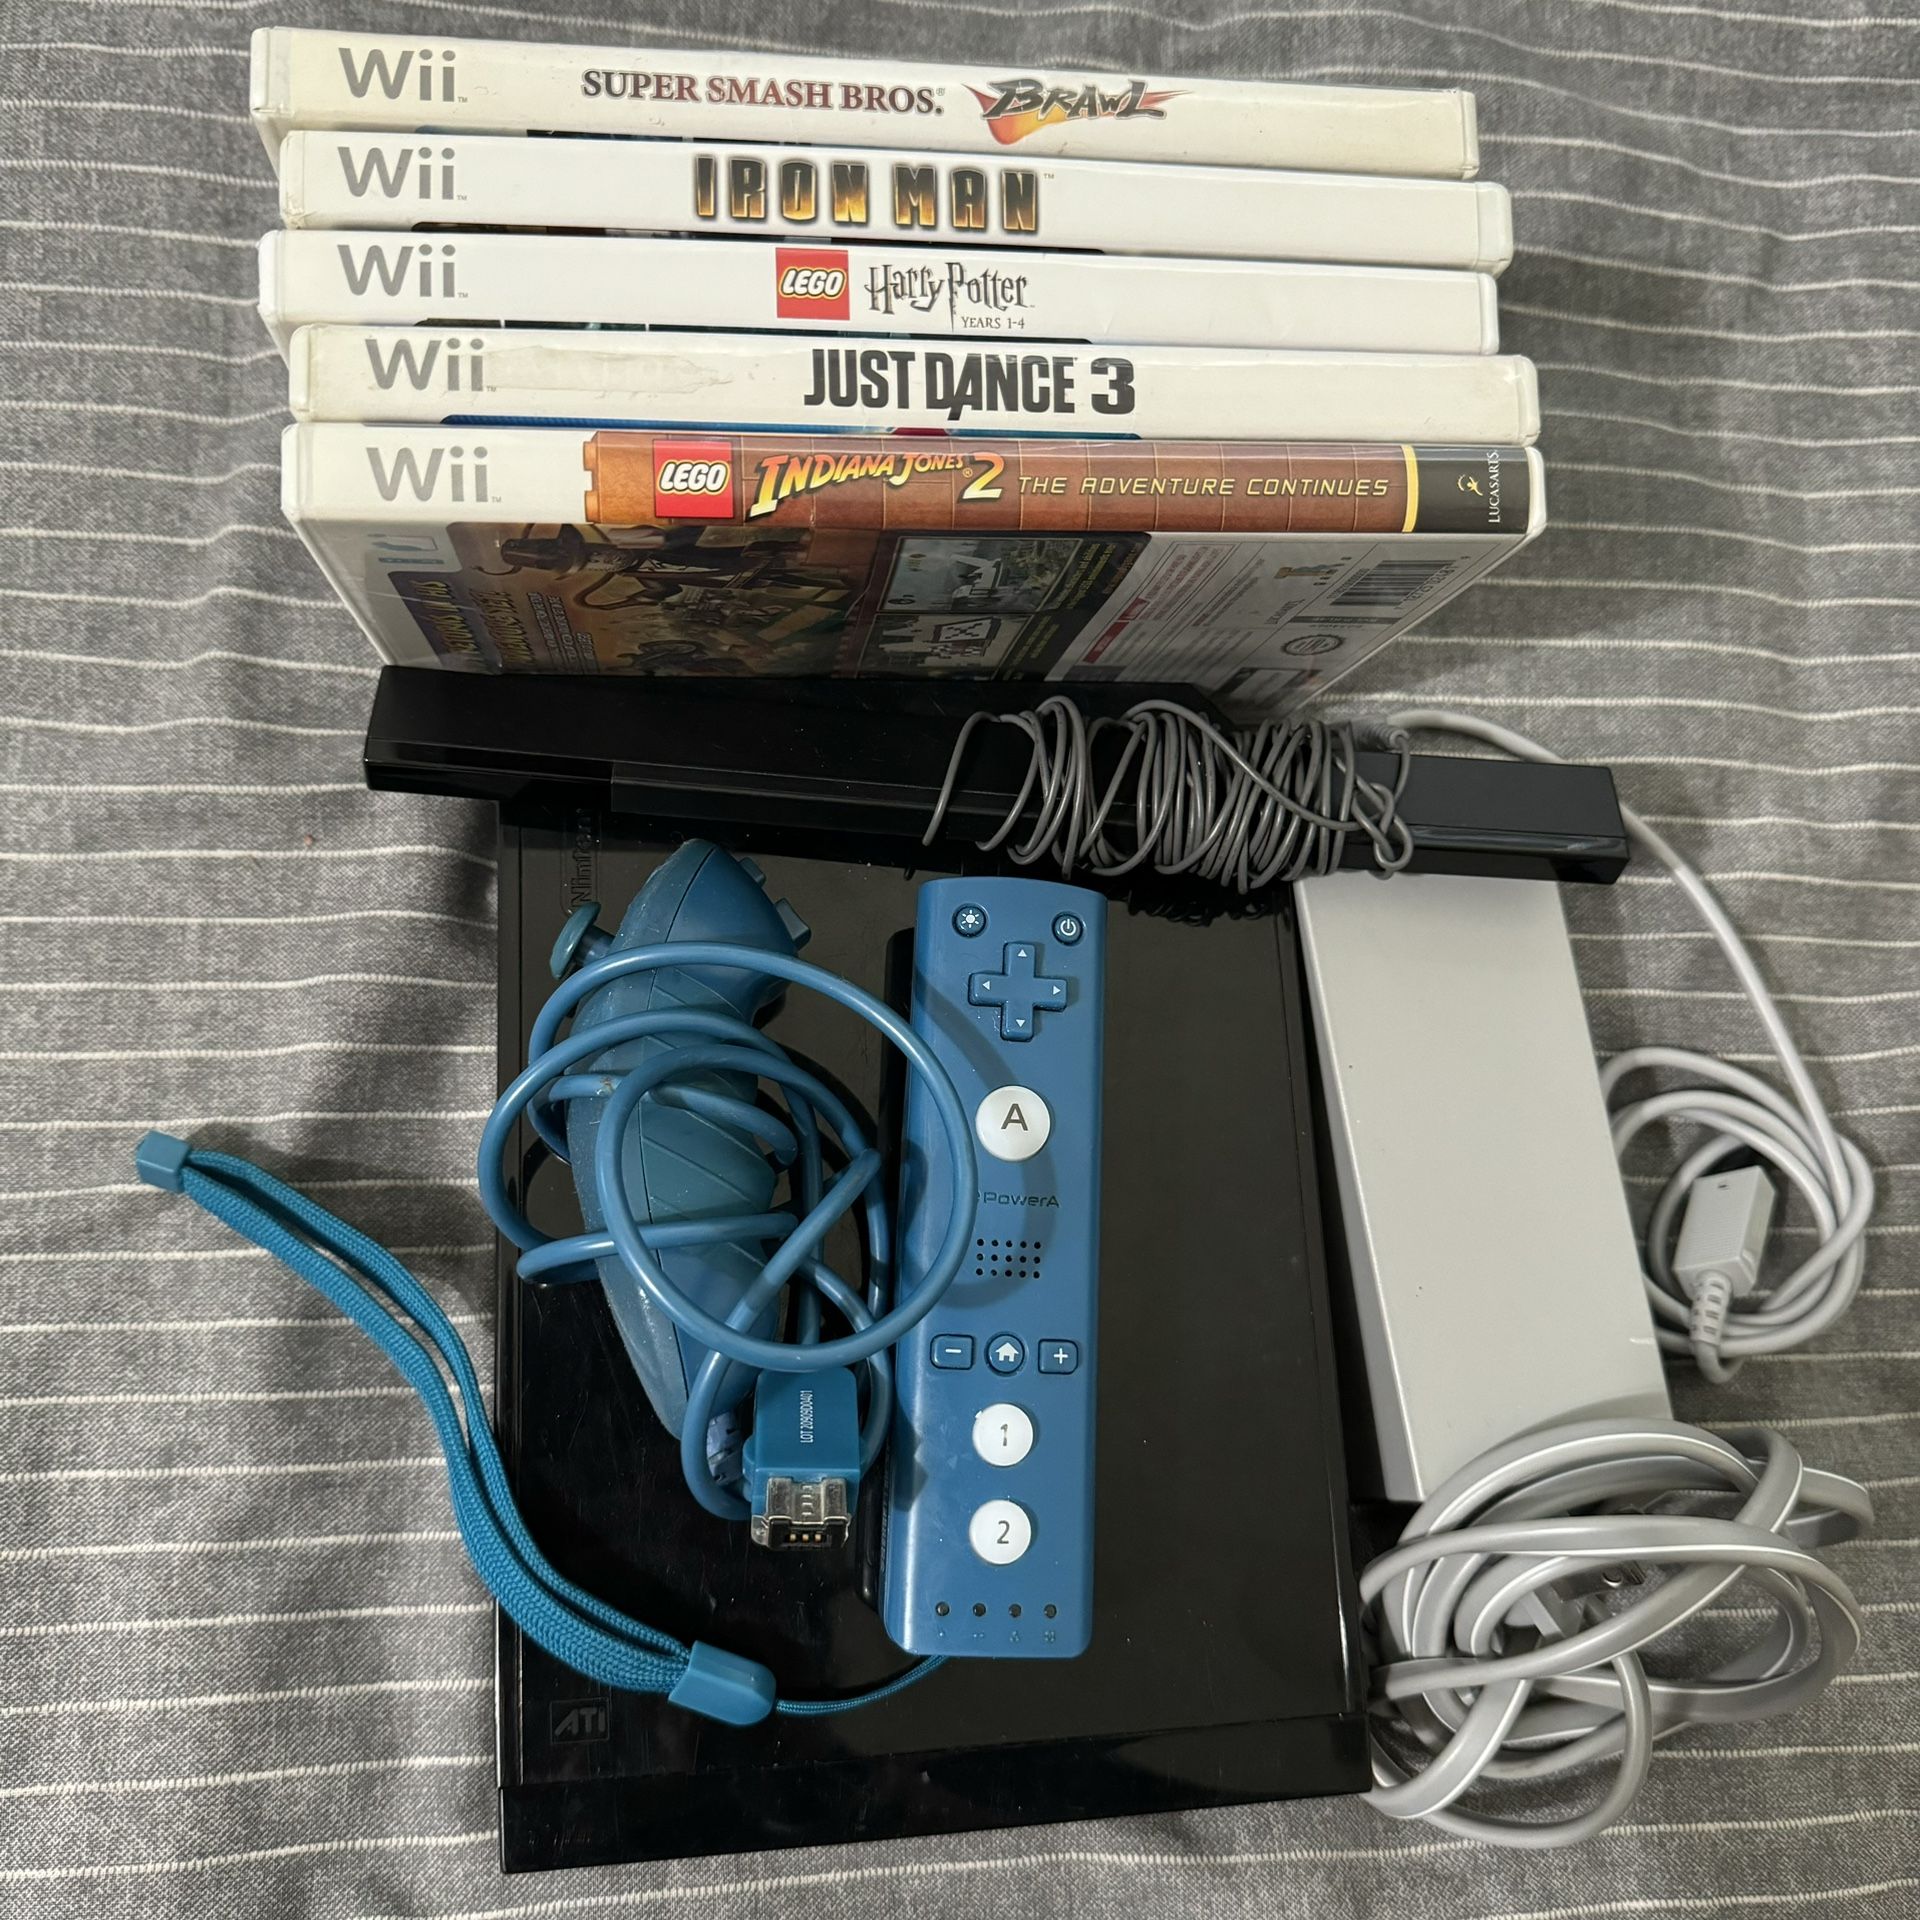 Nintendo Wii NOT GameCube Compatible